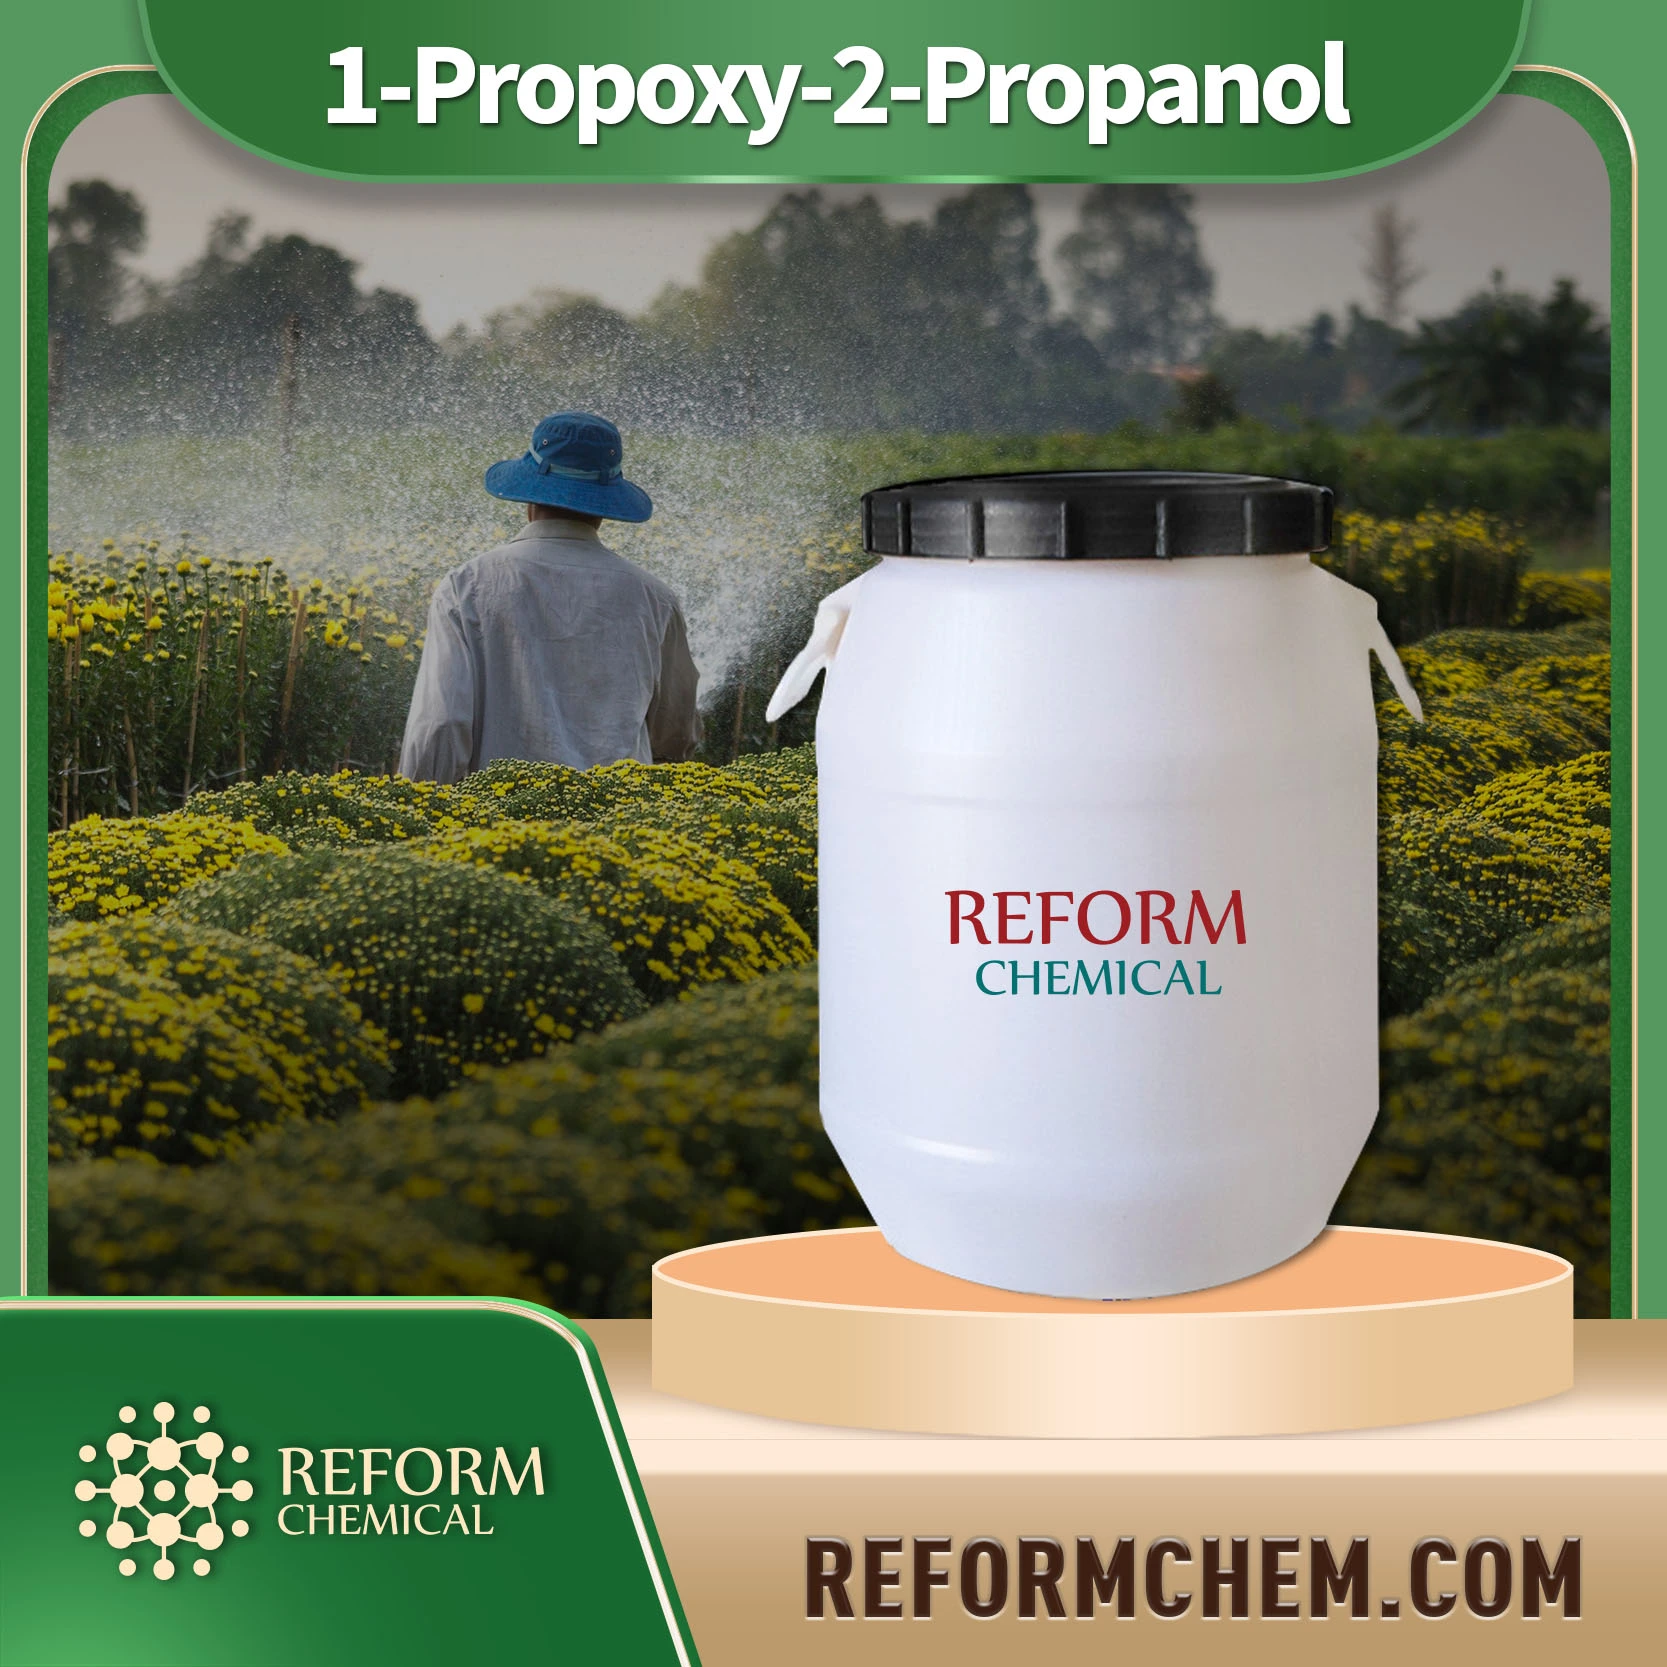 1-PROPOXY-2-PROPANOL